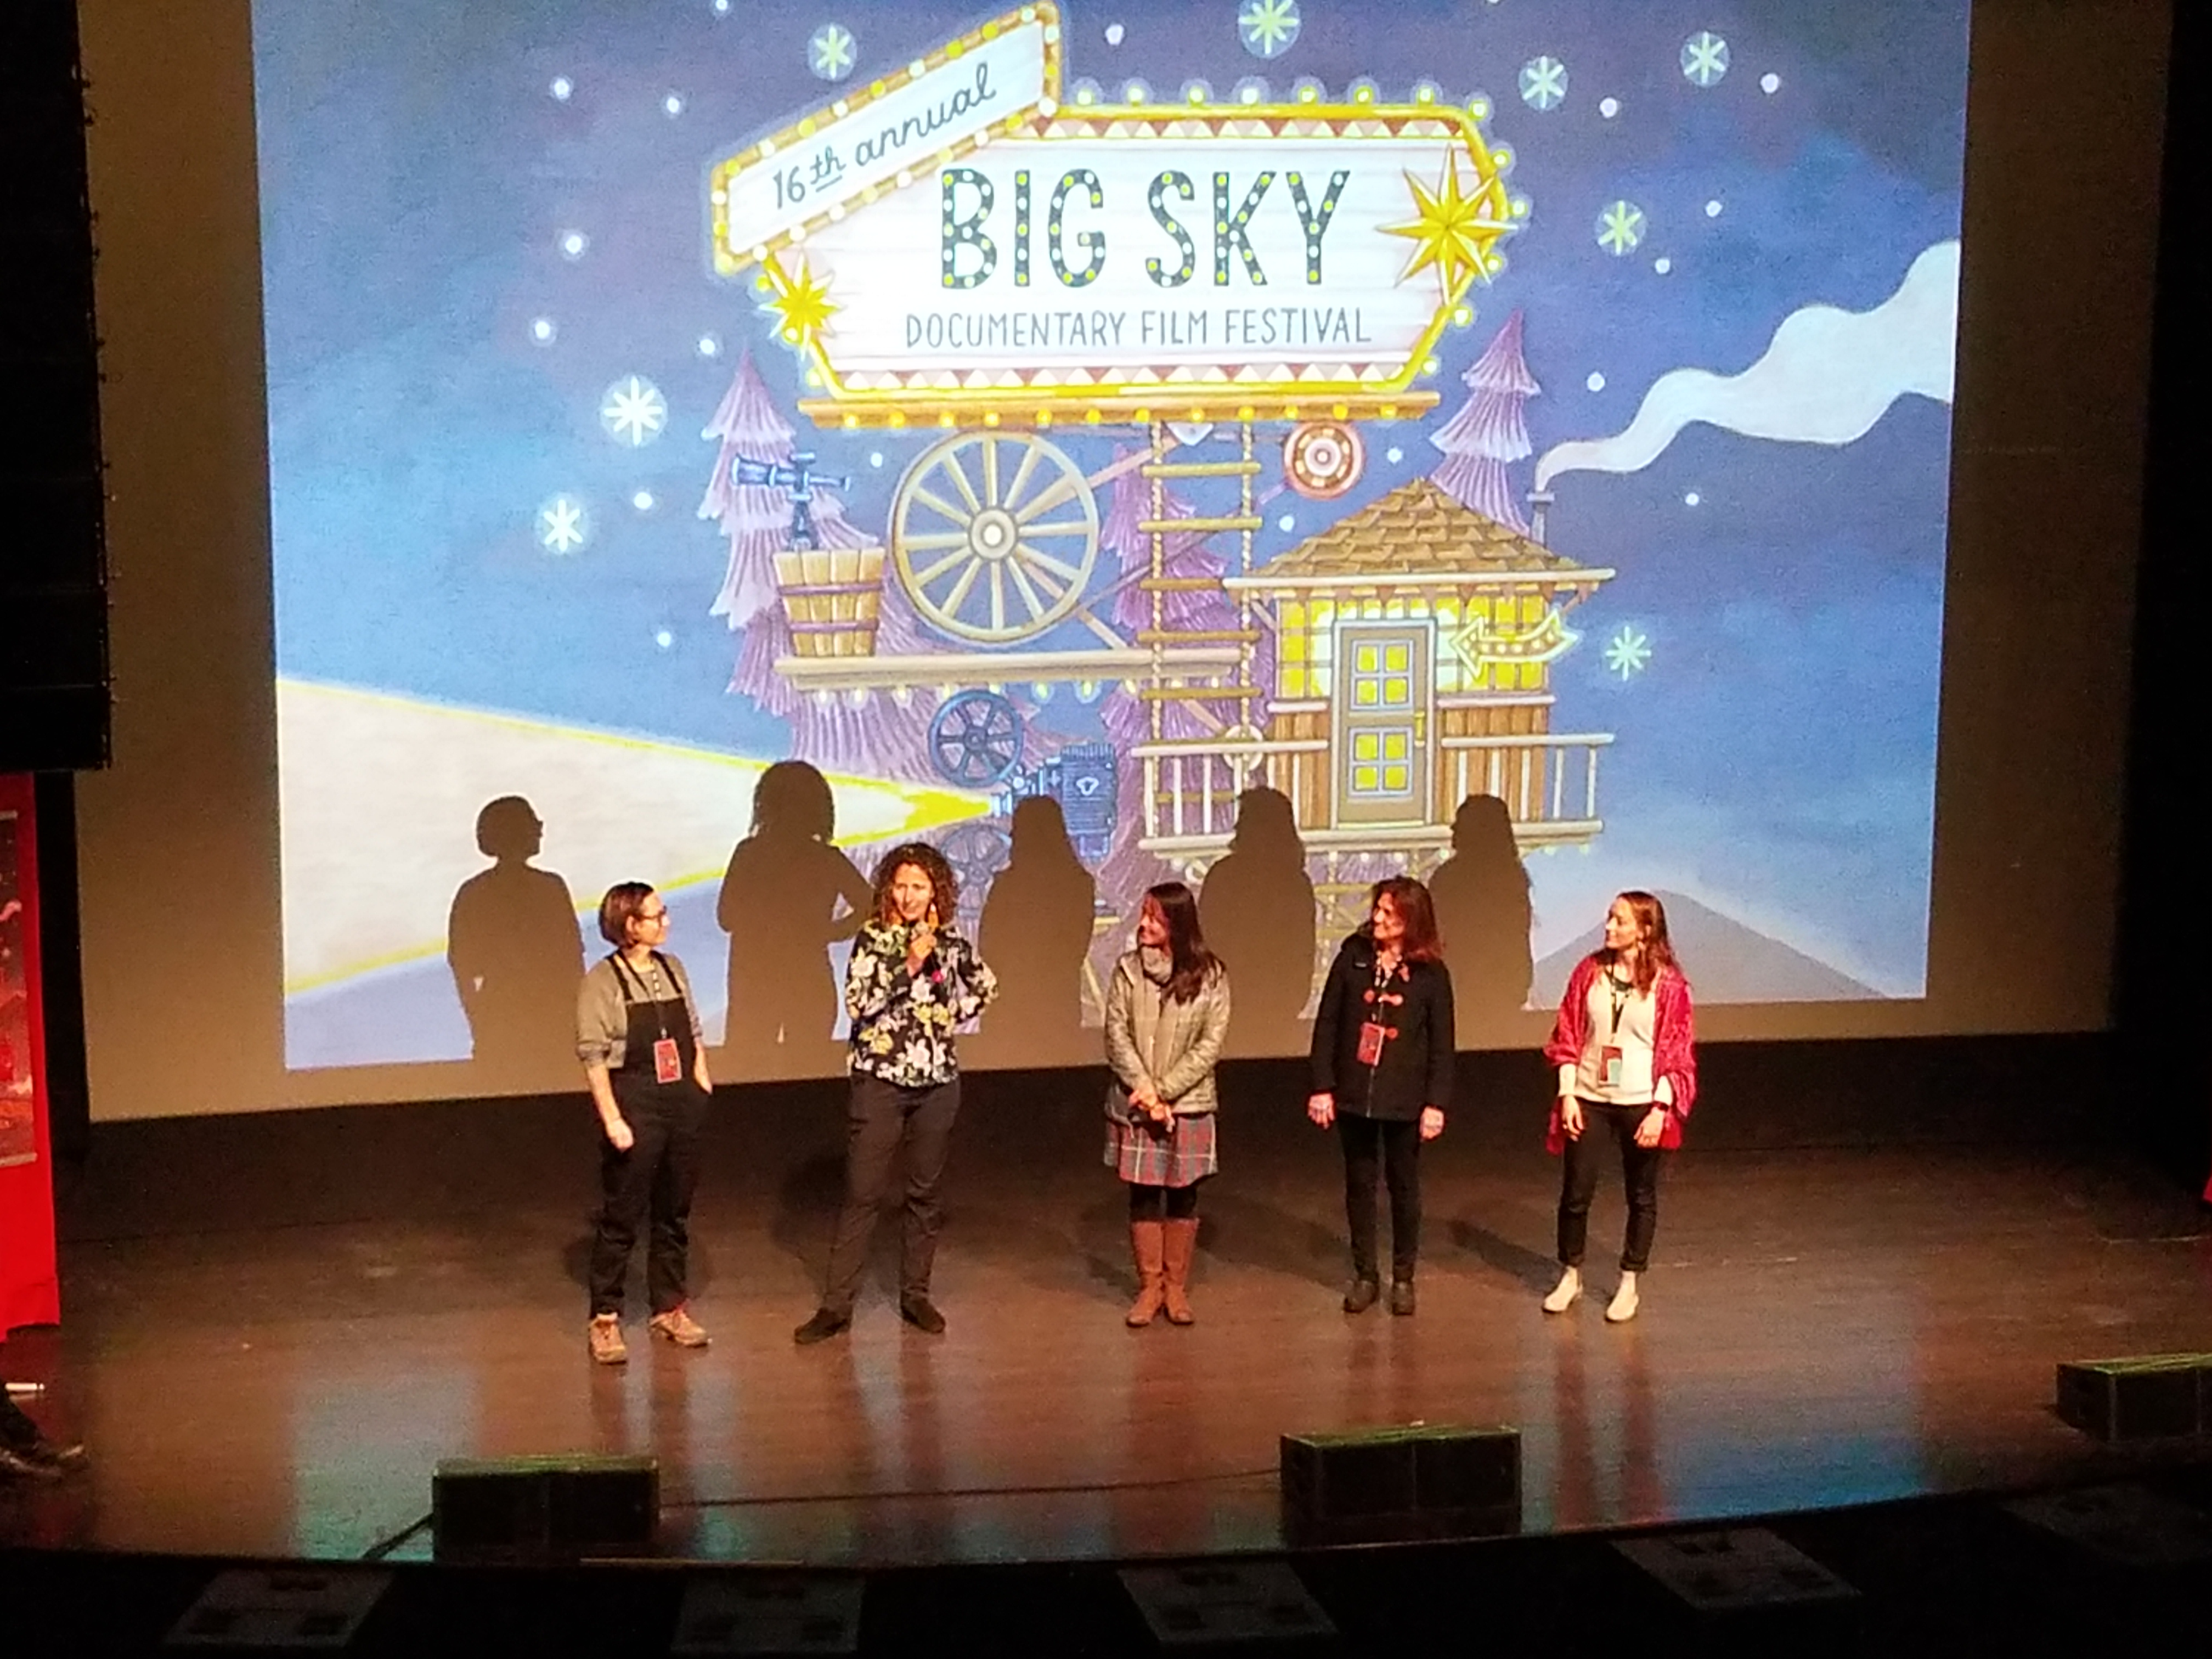 Big Sky Documentary Film Festival 2019 Friday version